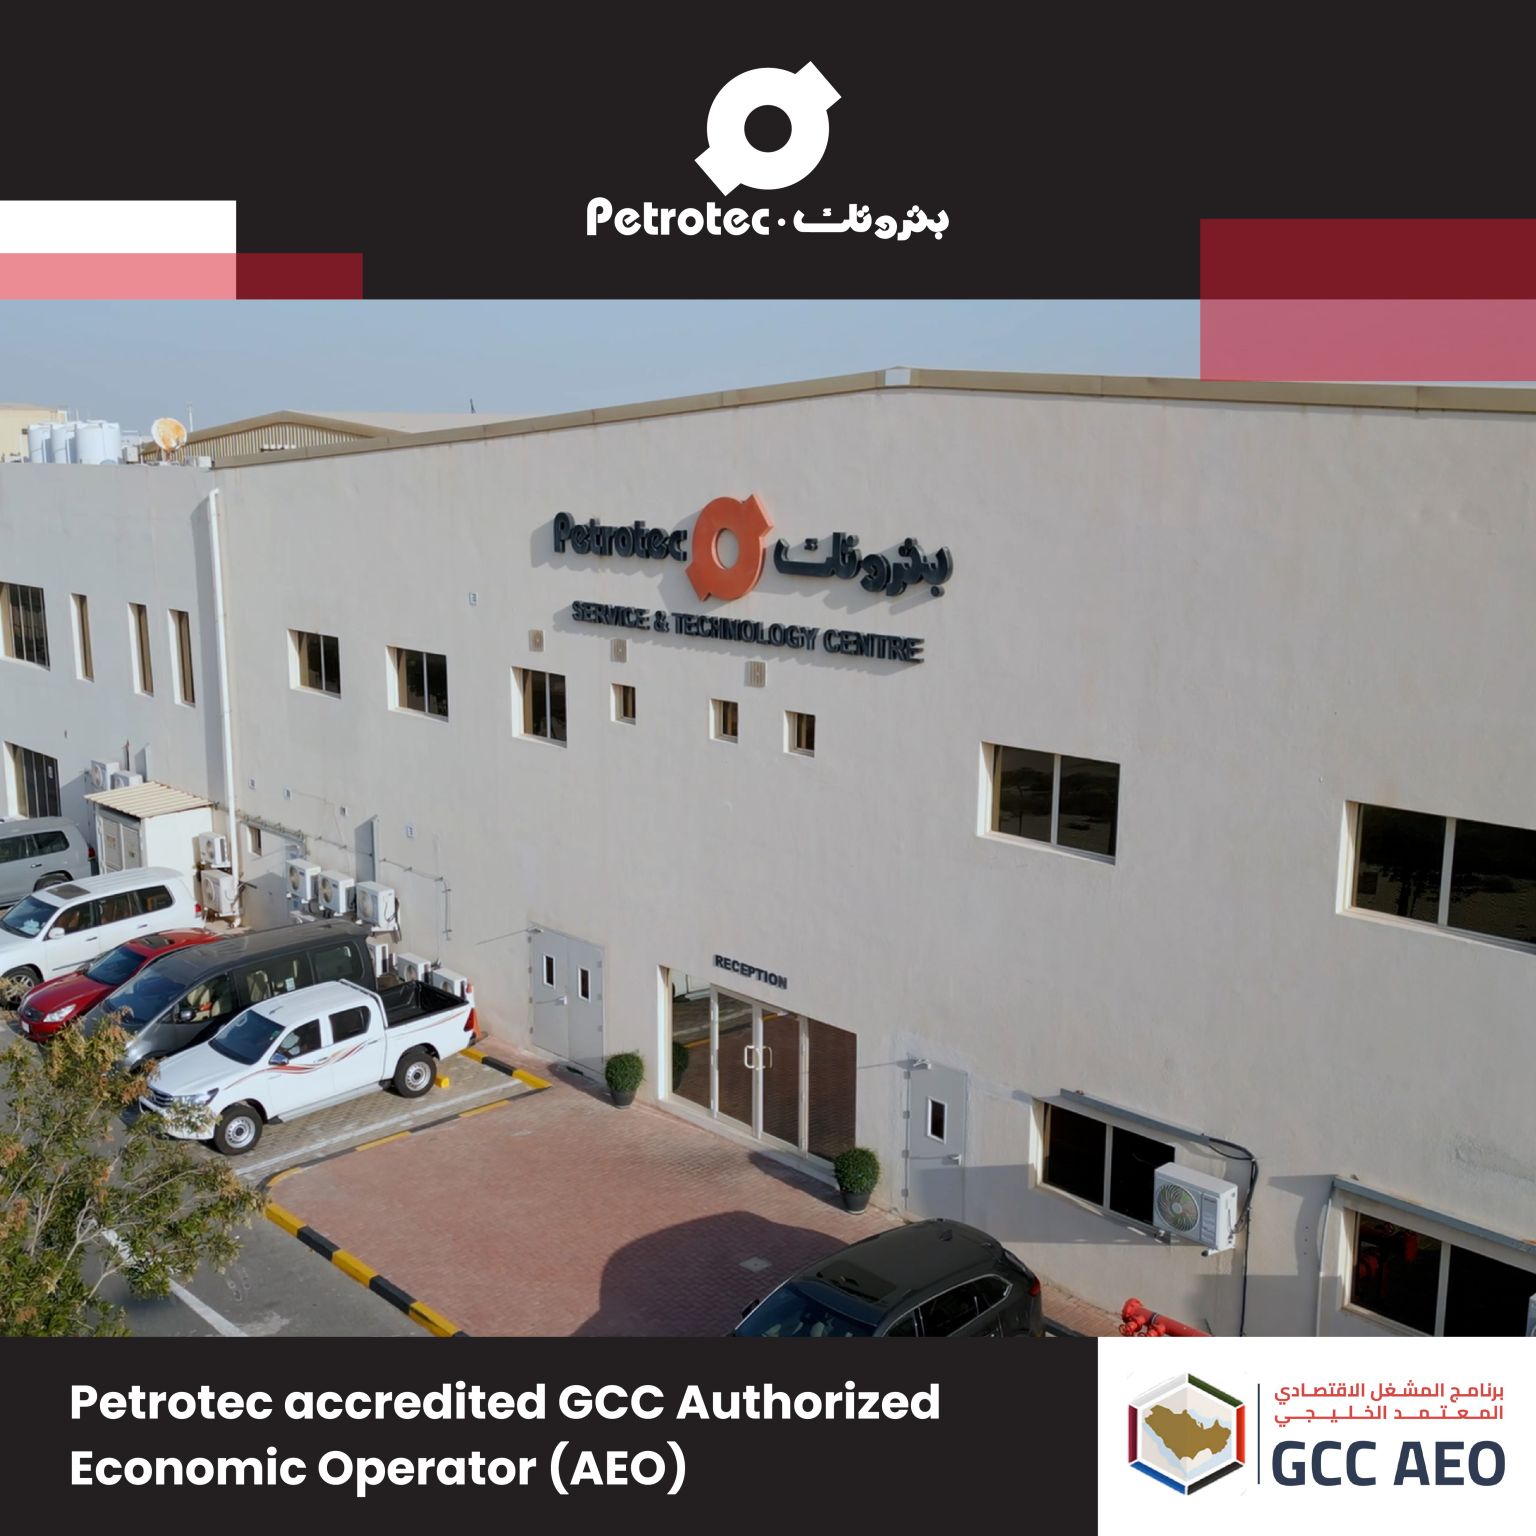 Petrotec accredited GCC Authorized Economic Operator (AEO)